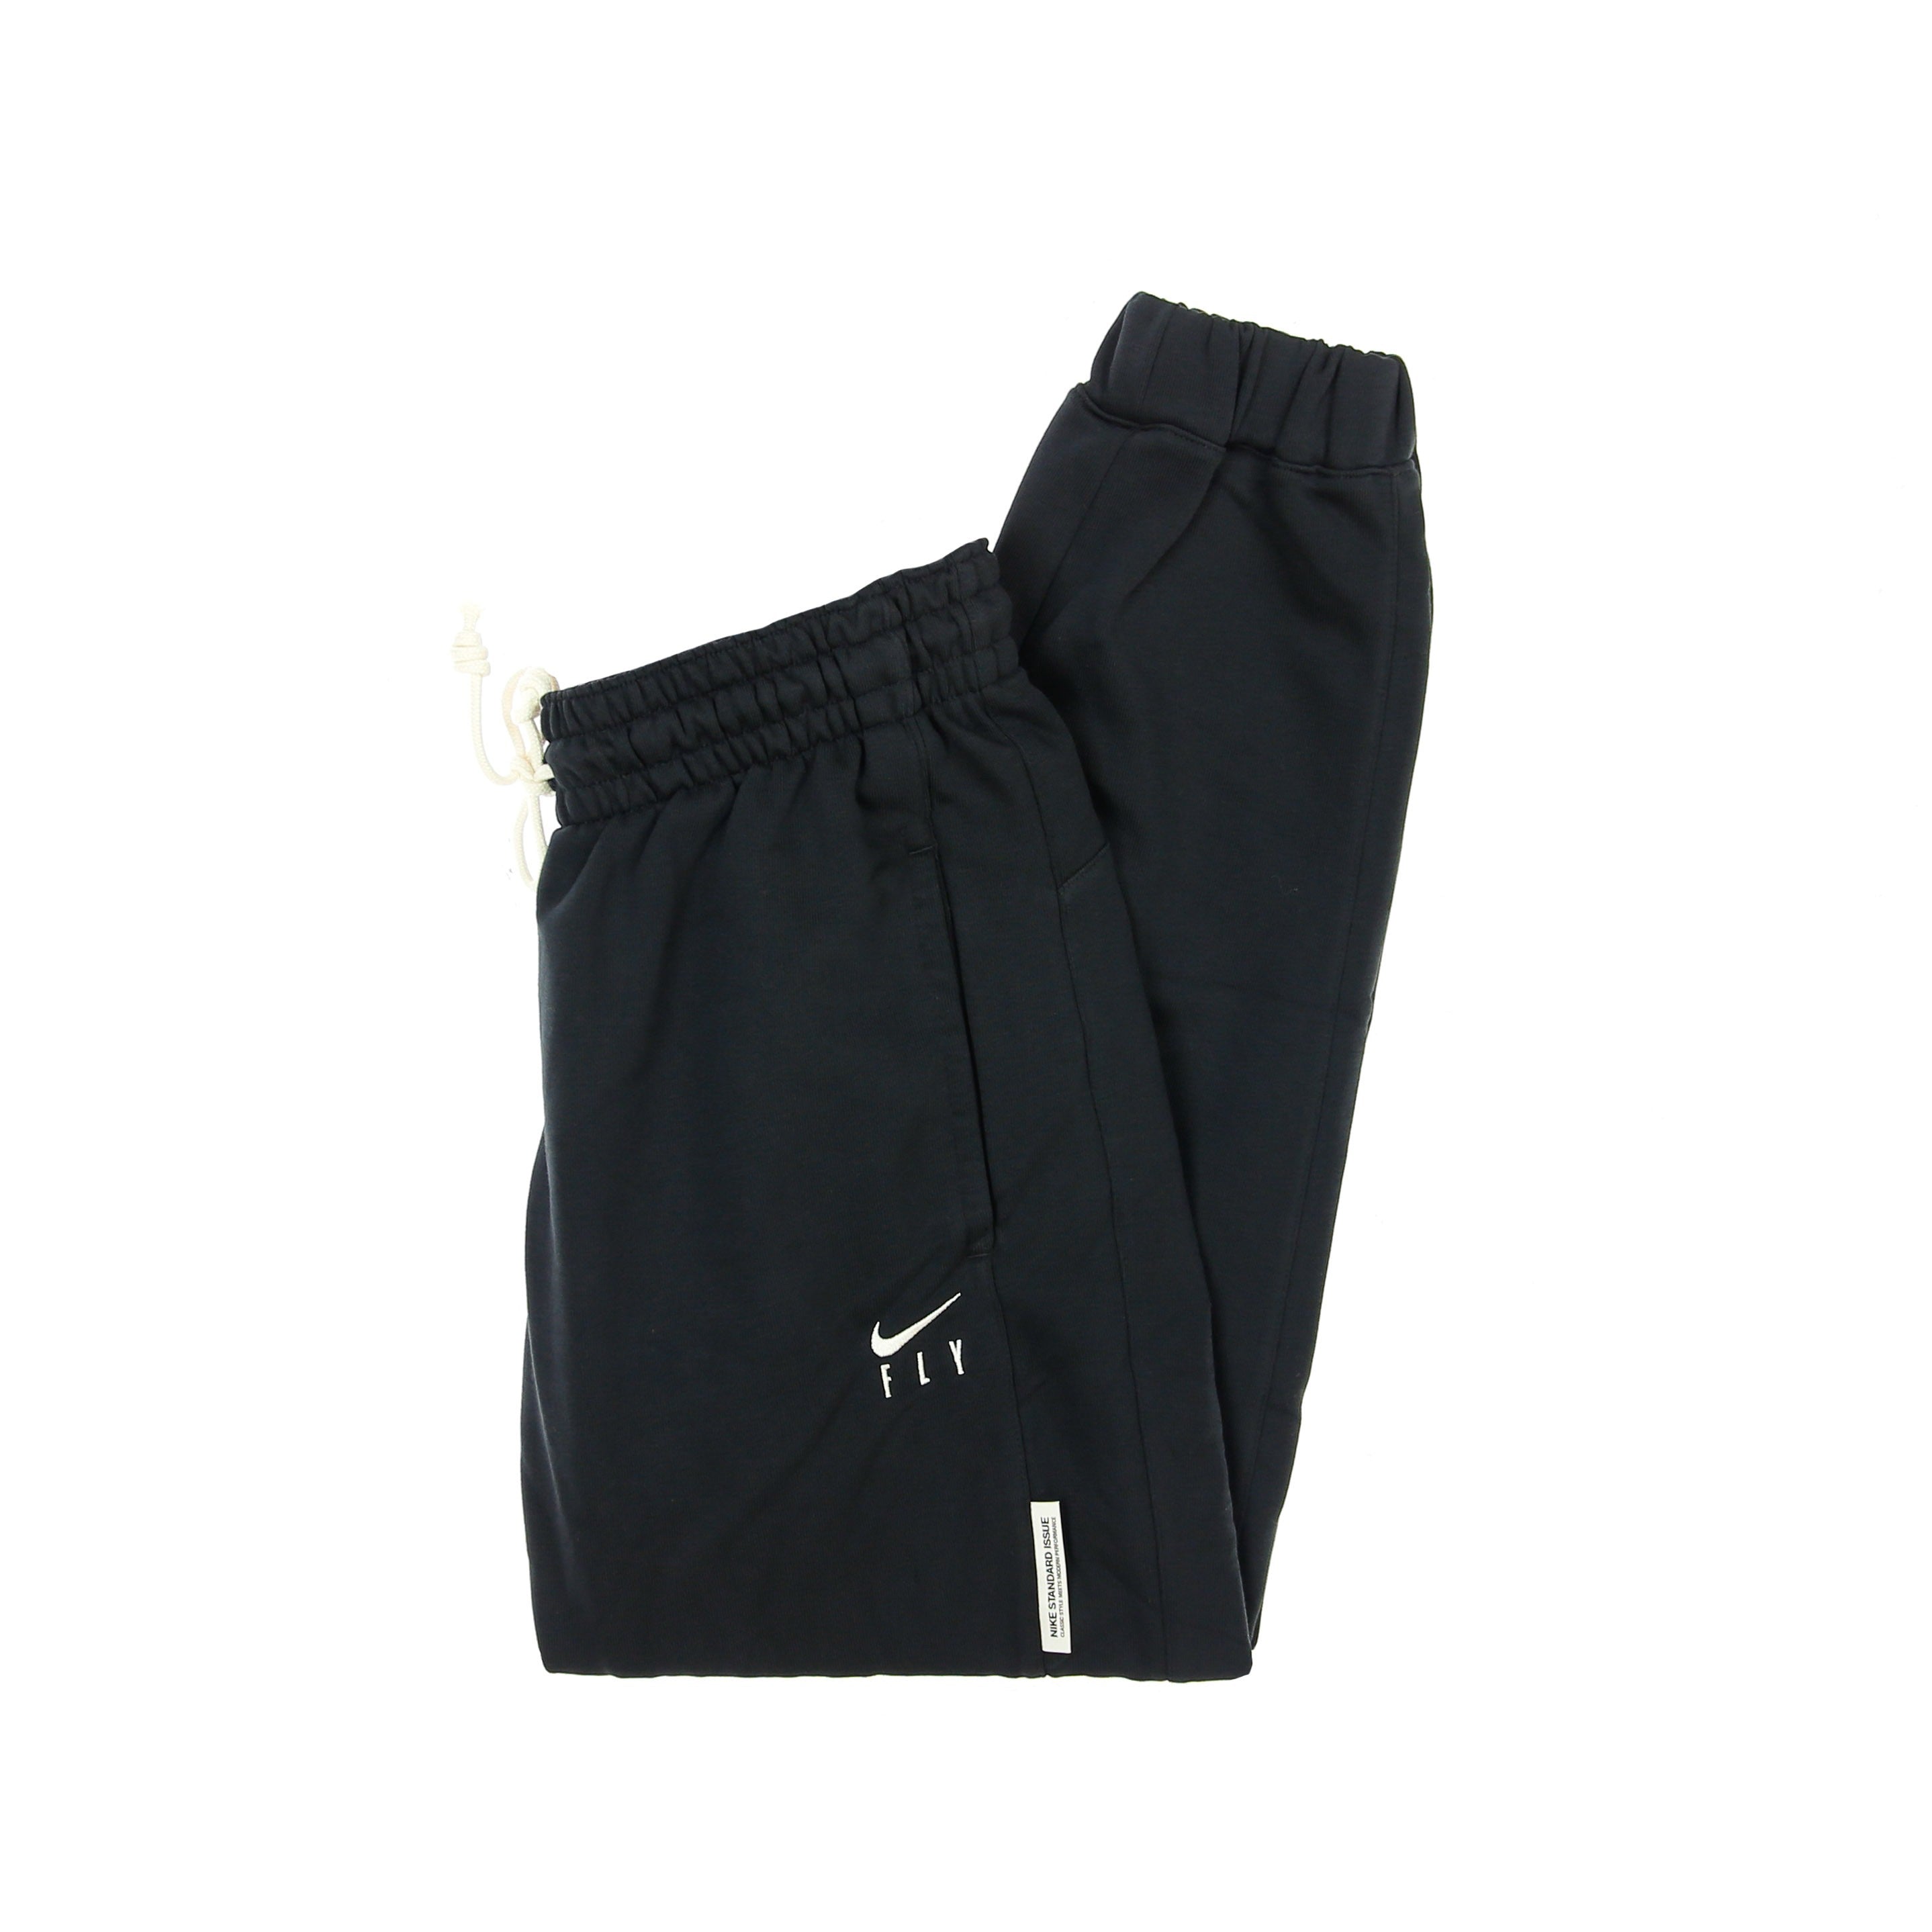 Nike, Pantalone Tuta Leggero Donna W Standard Issue Pant, Black/pale Ivory